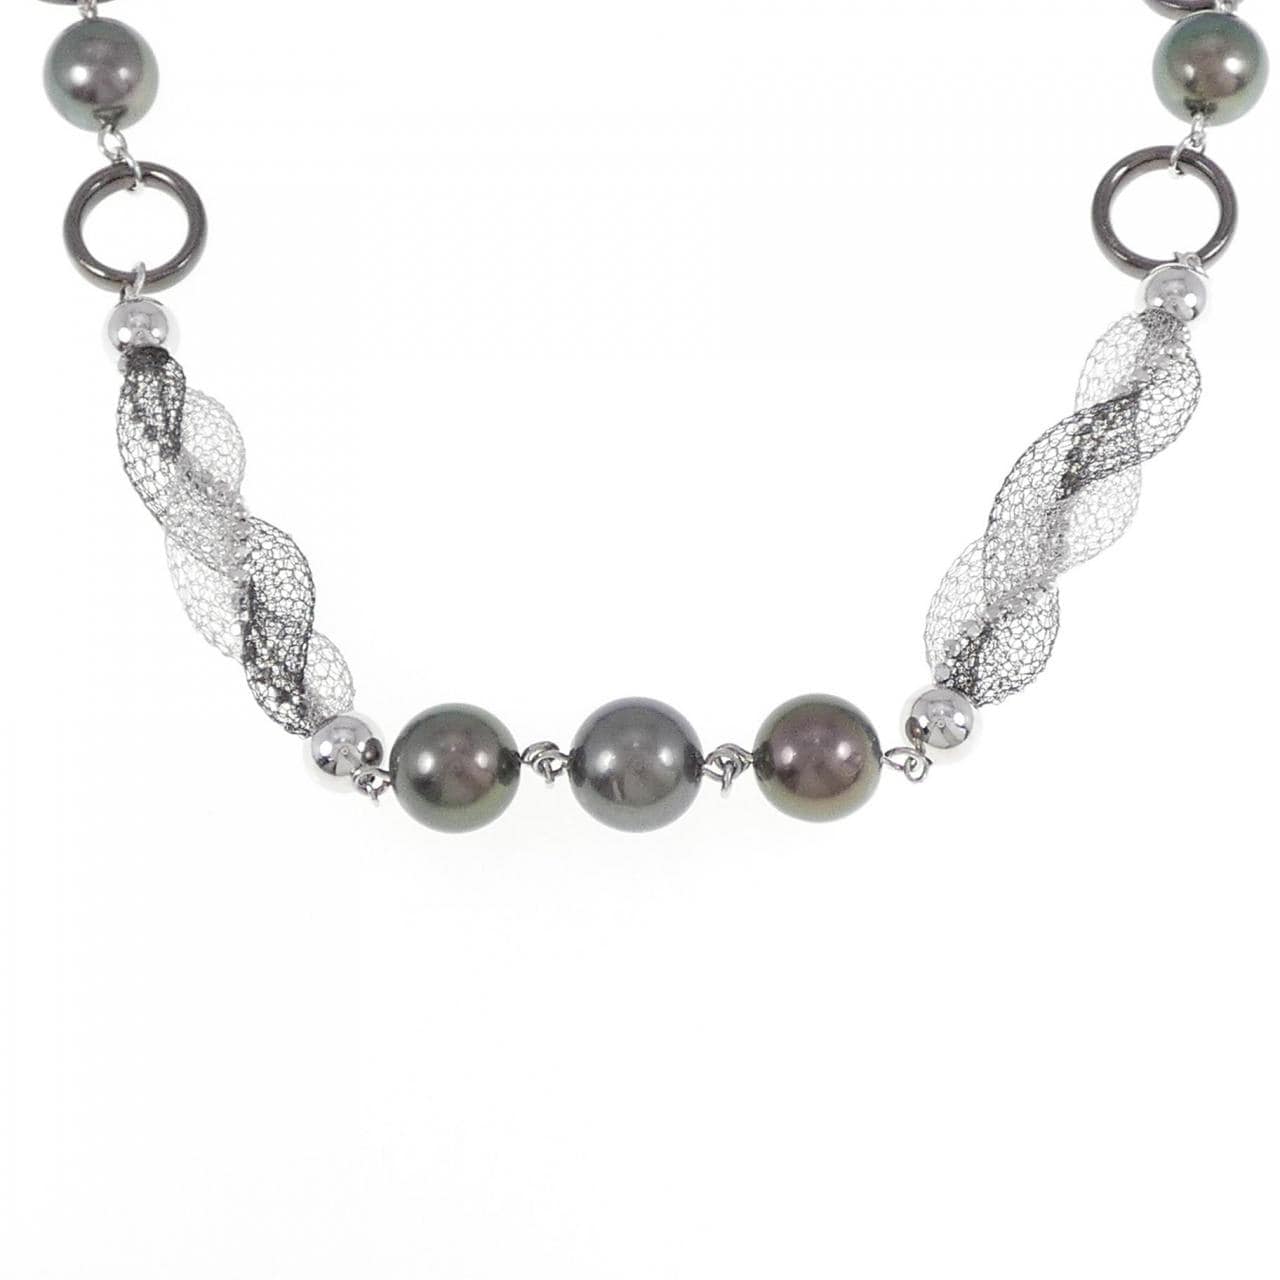 K18WG/K18BG black butterfly pearl necklace